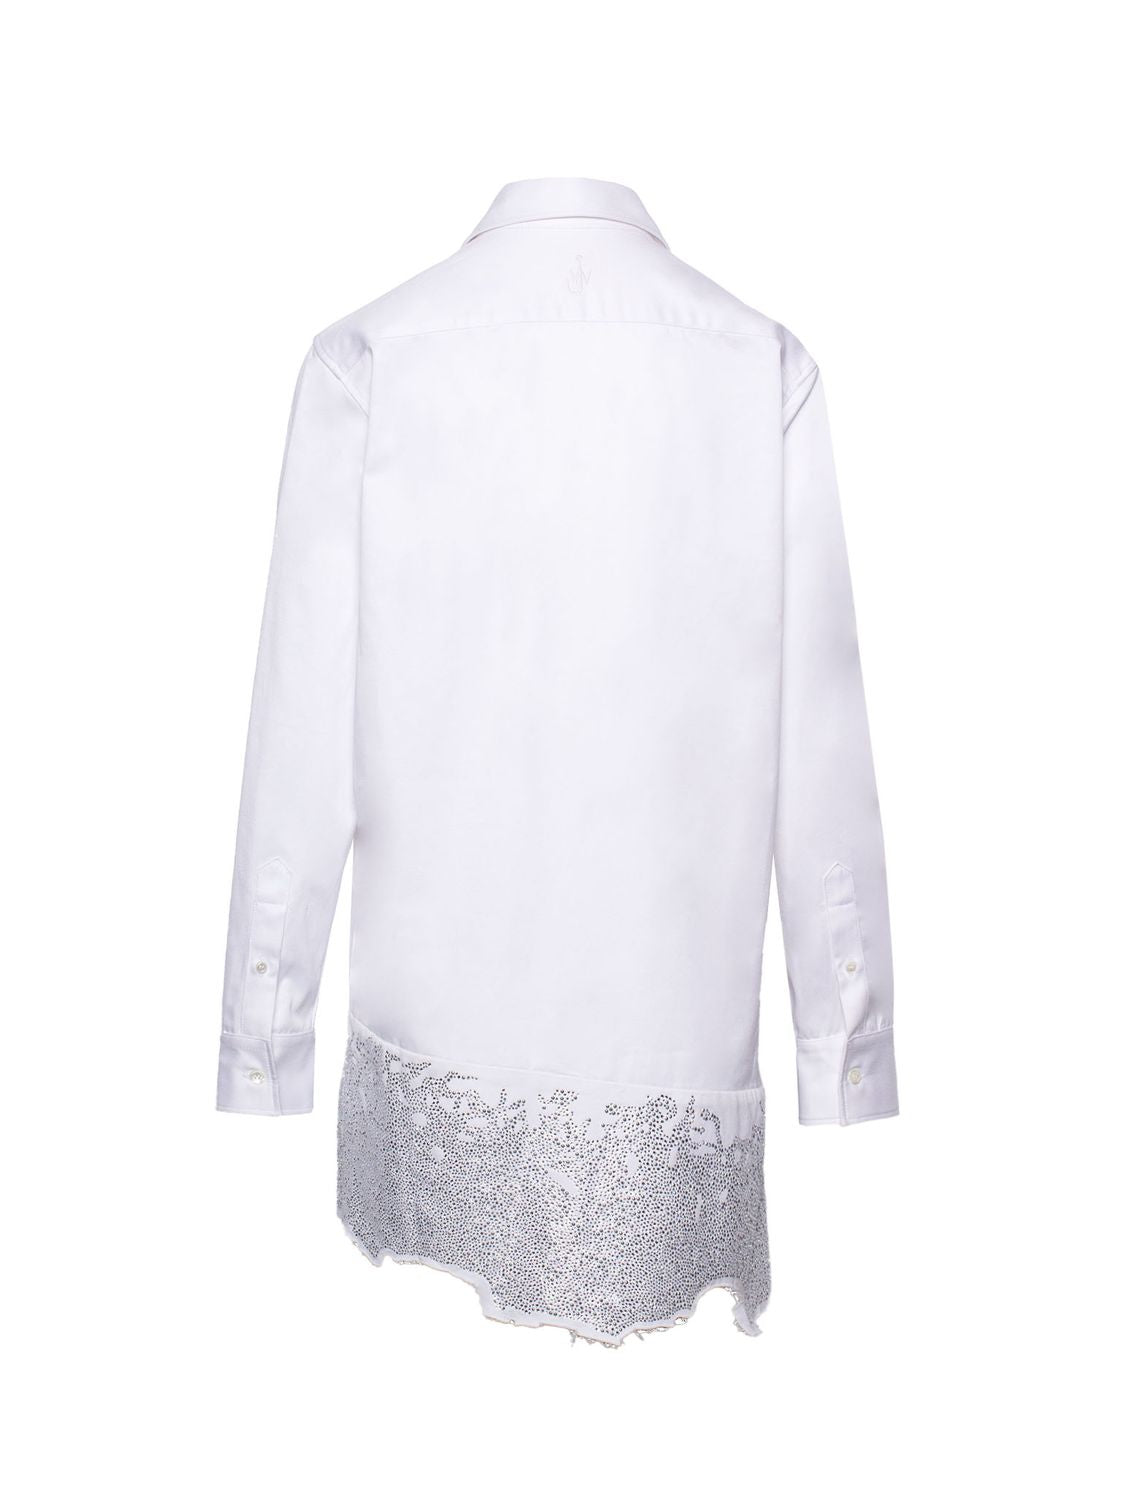 JW ANDERSON Cotton Crystal-Embellished Shirt Dress for Women